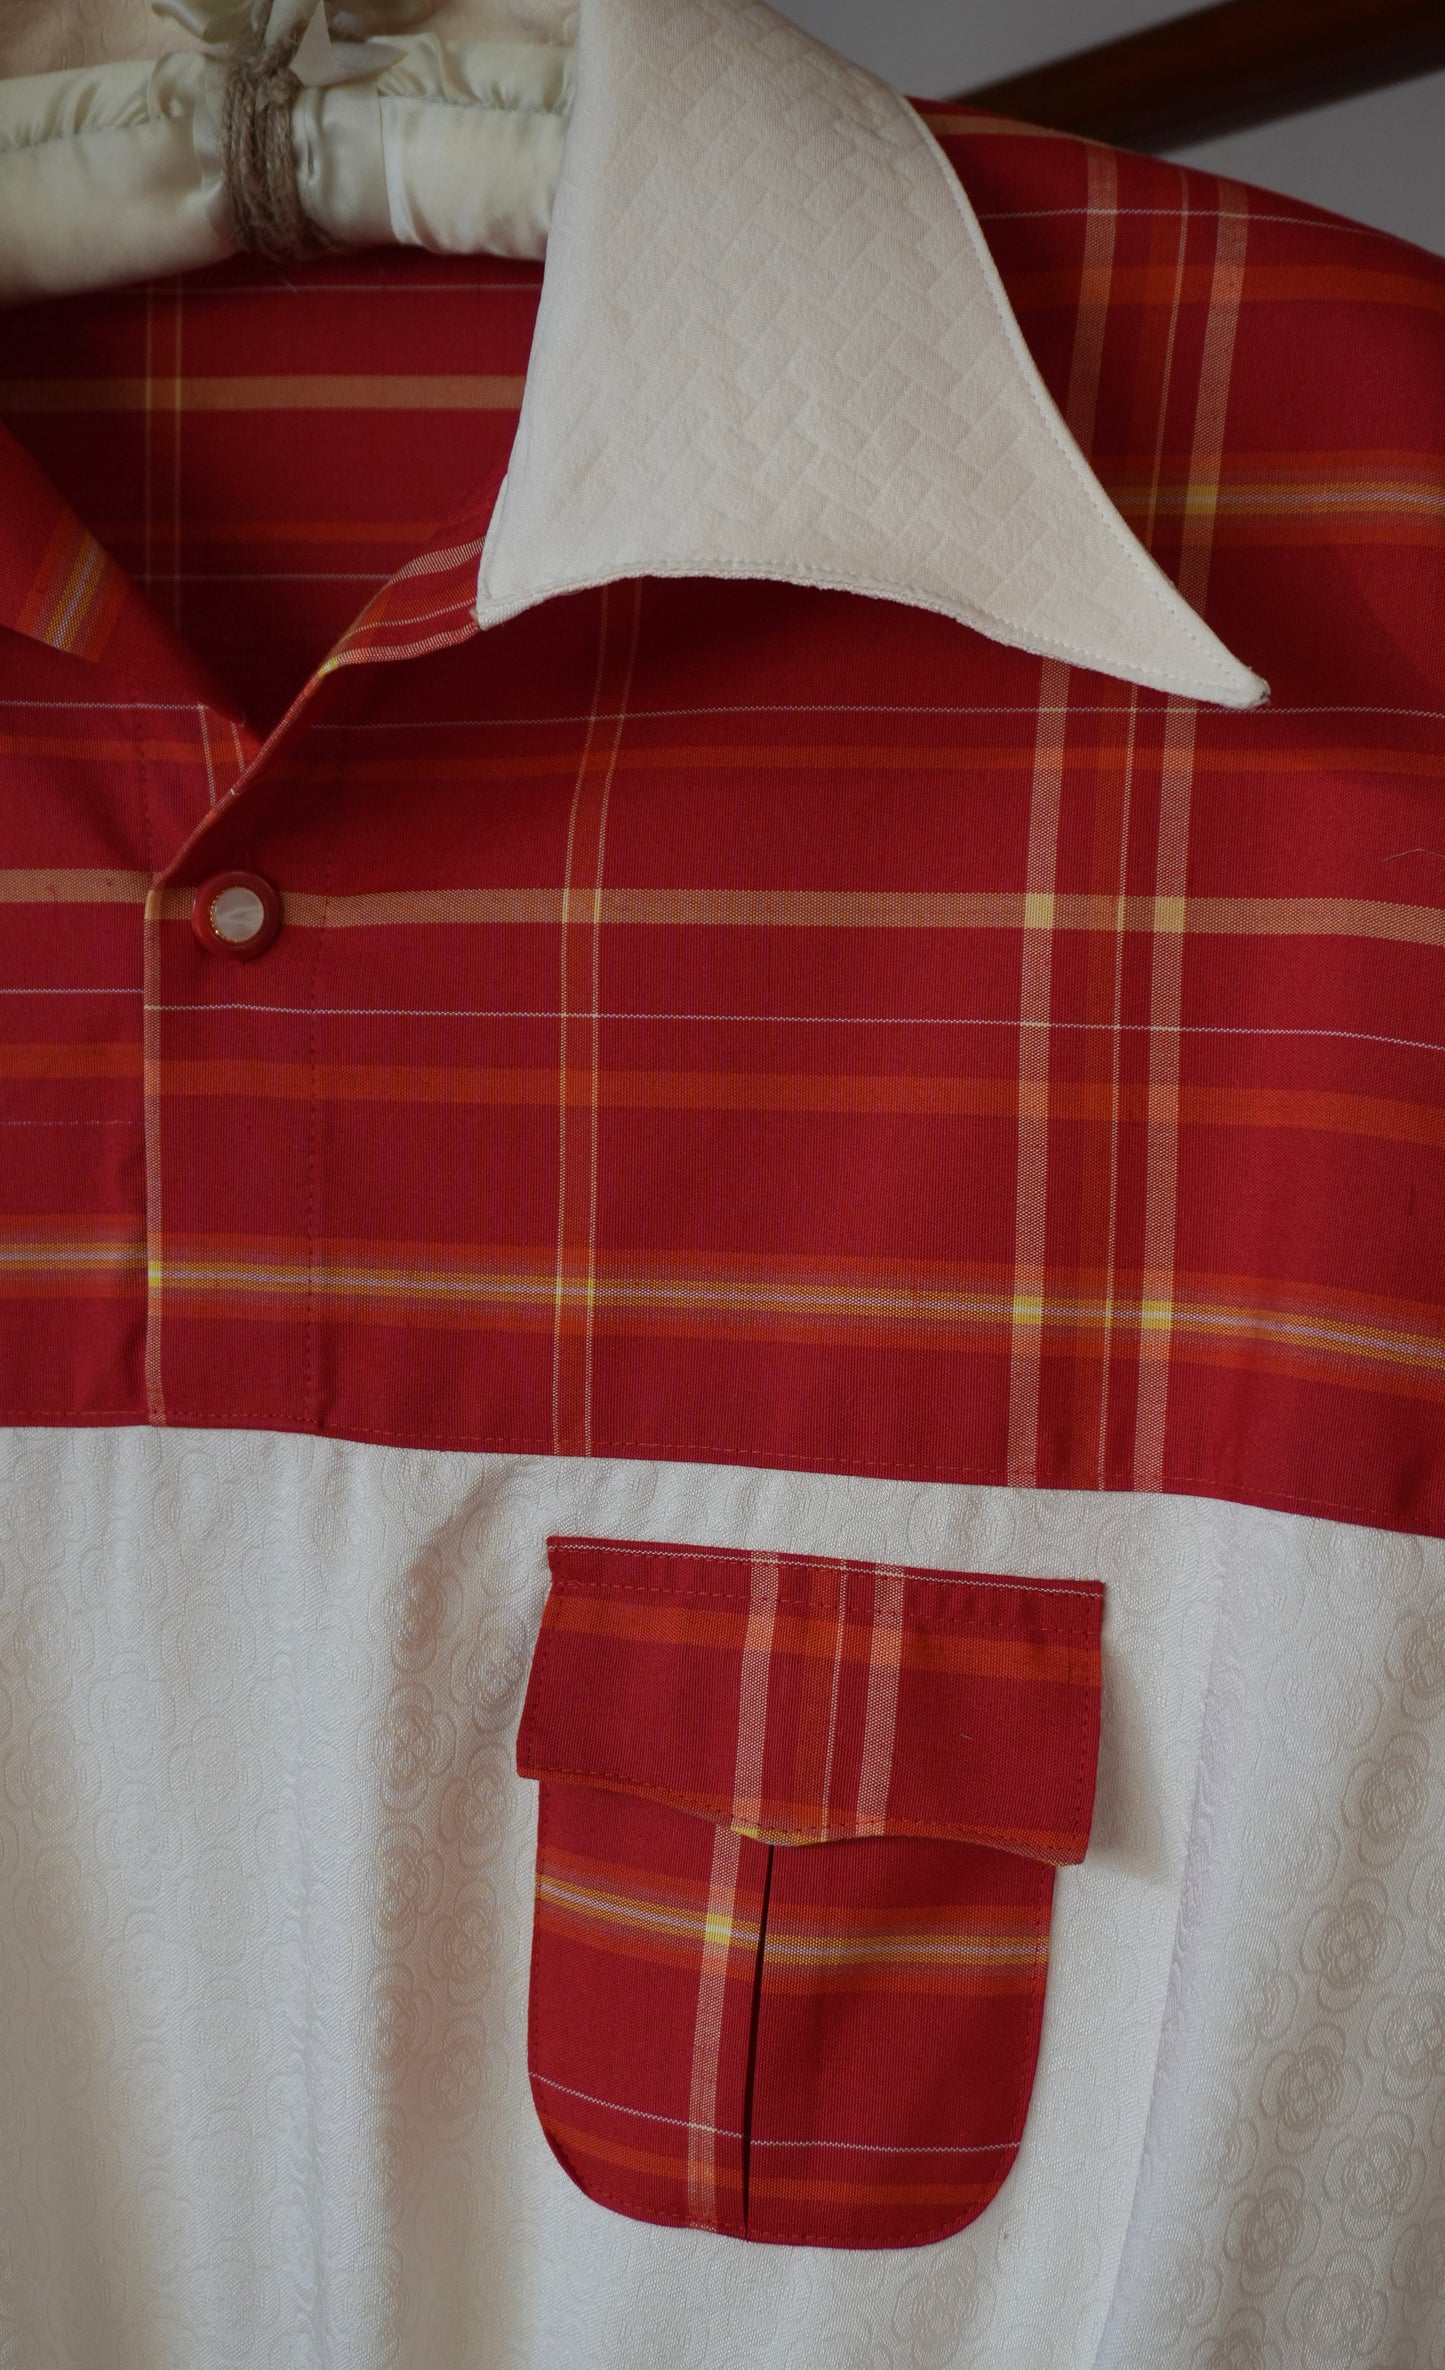 M Size Checkered Red Silk Shirt (No. 16/100)